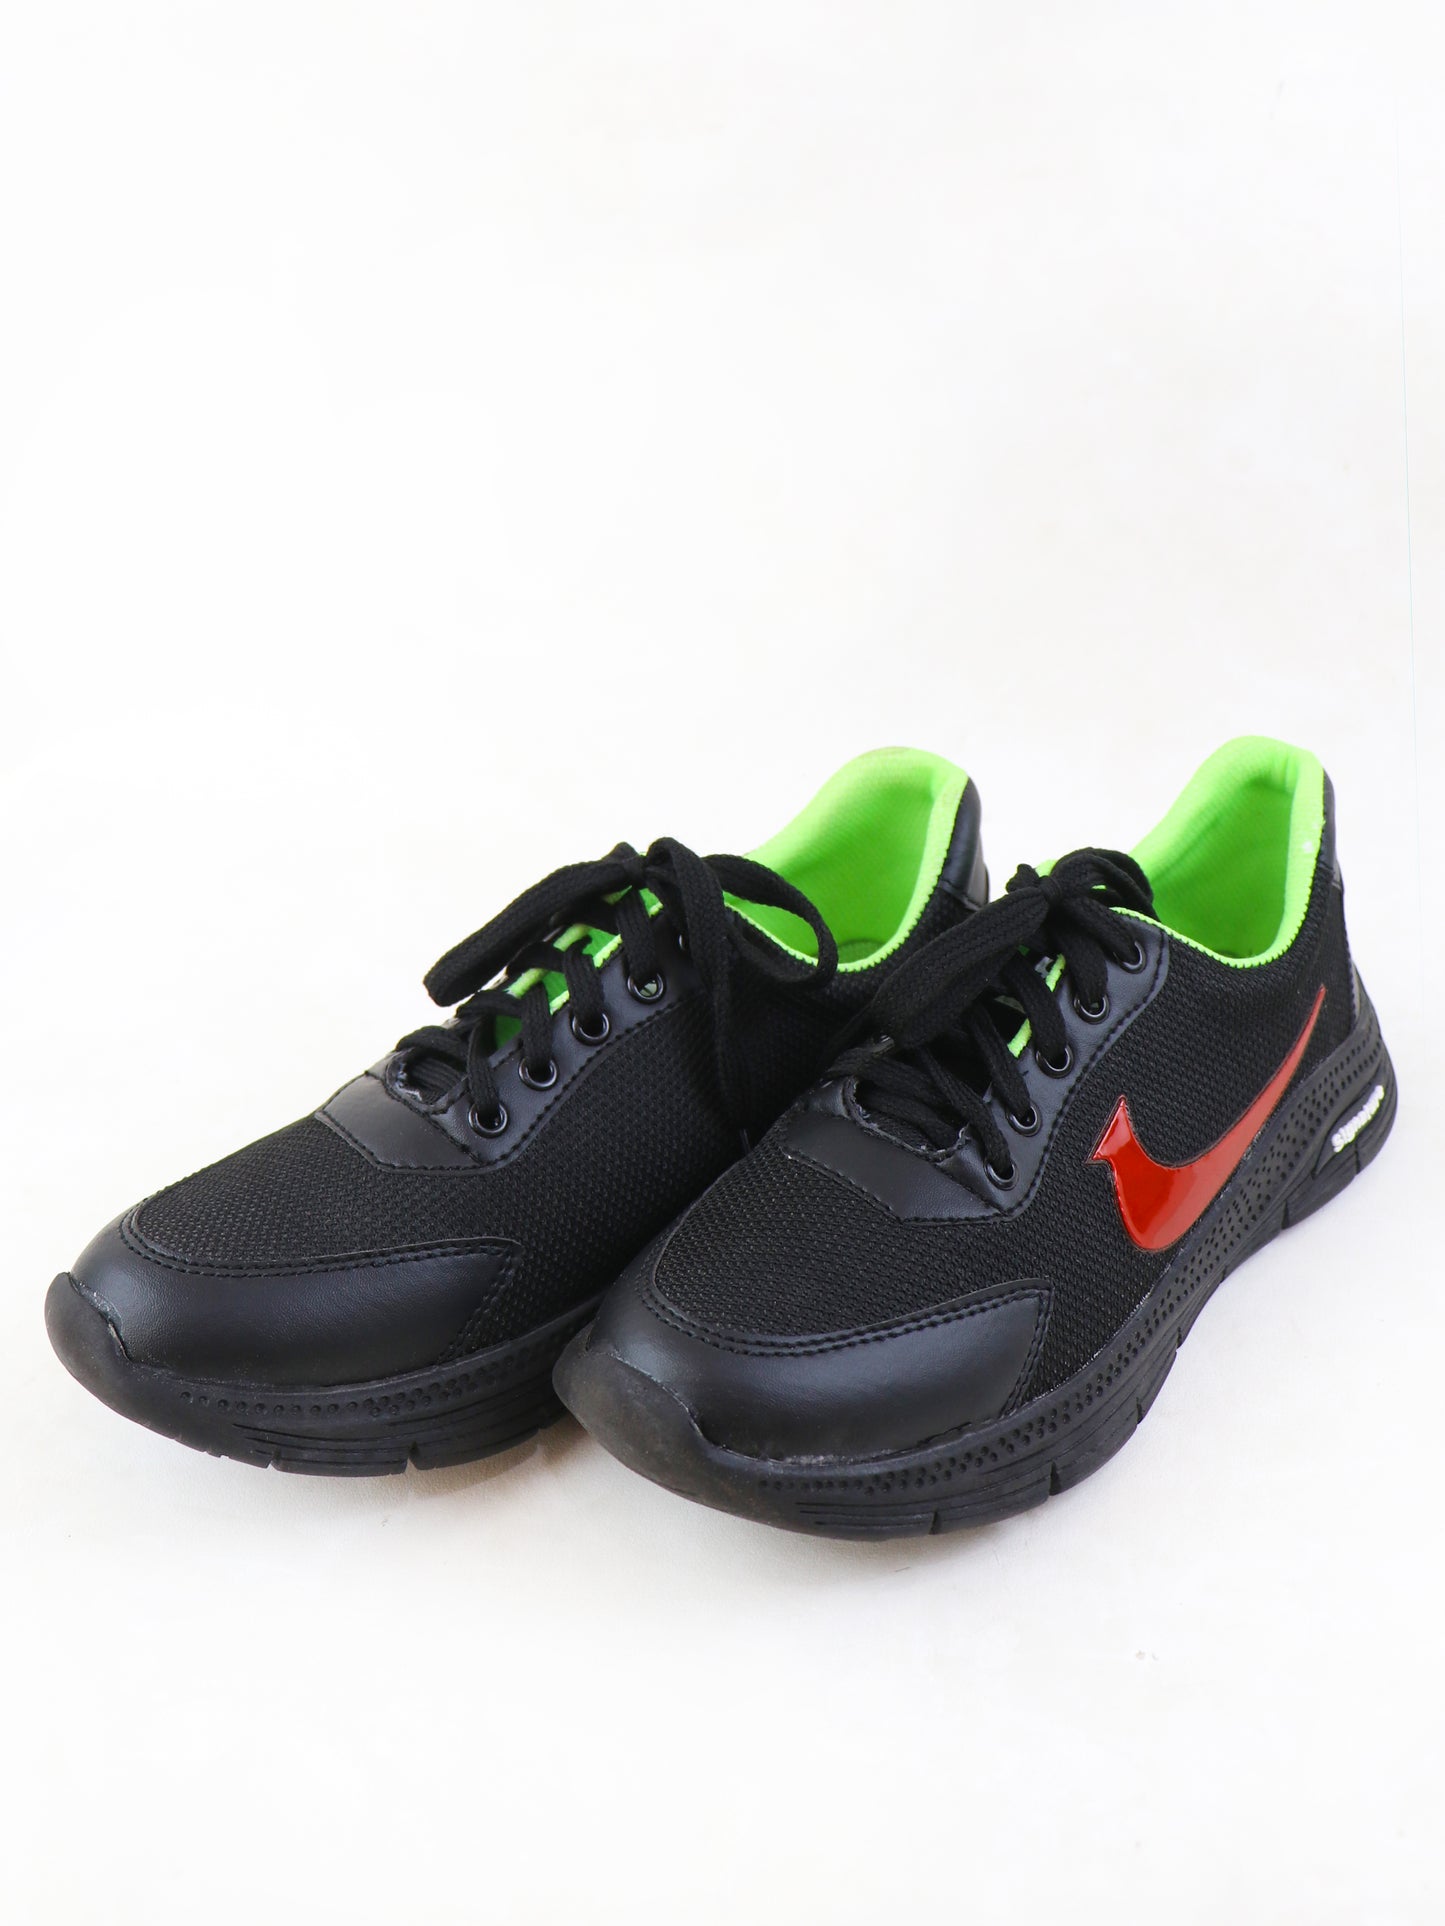 MJS45 Sneakers for Men N Black